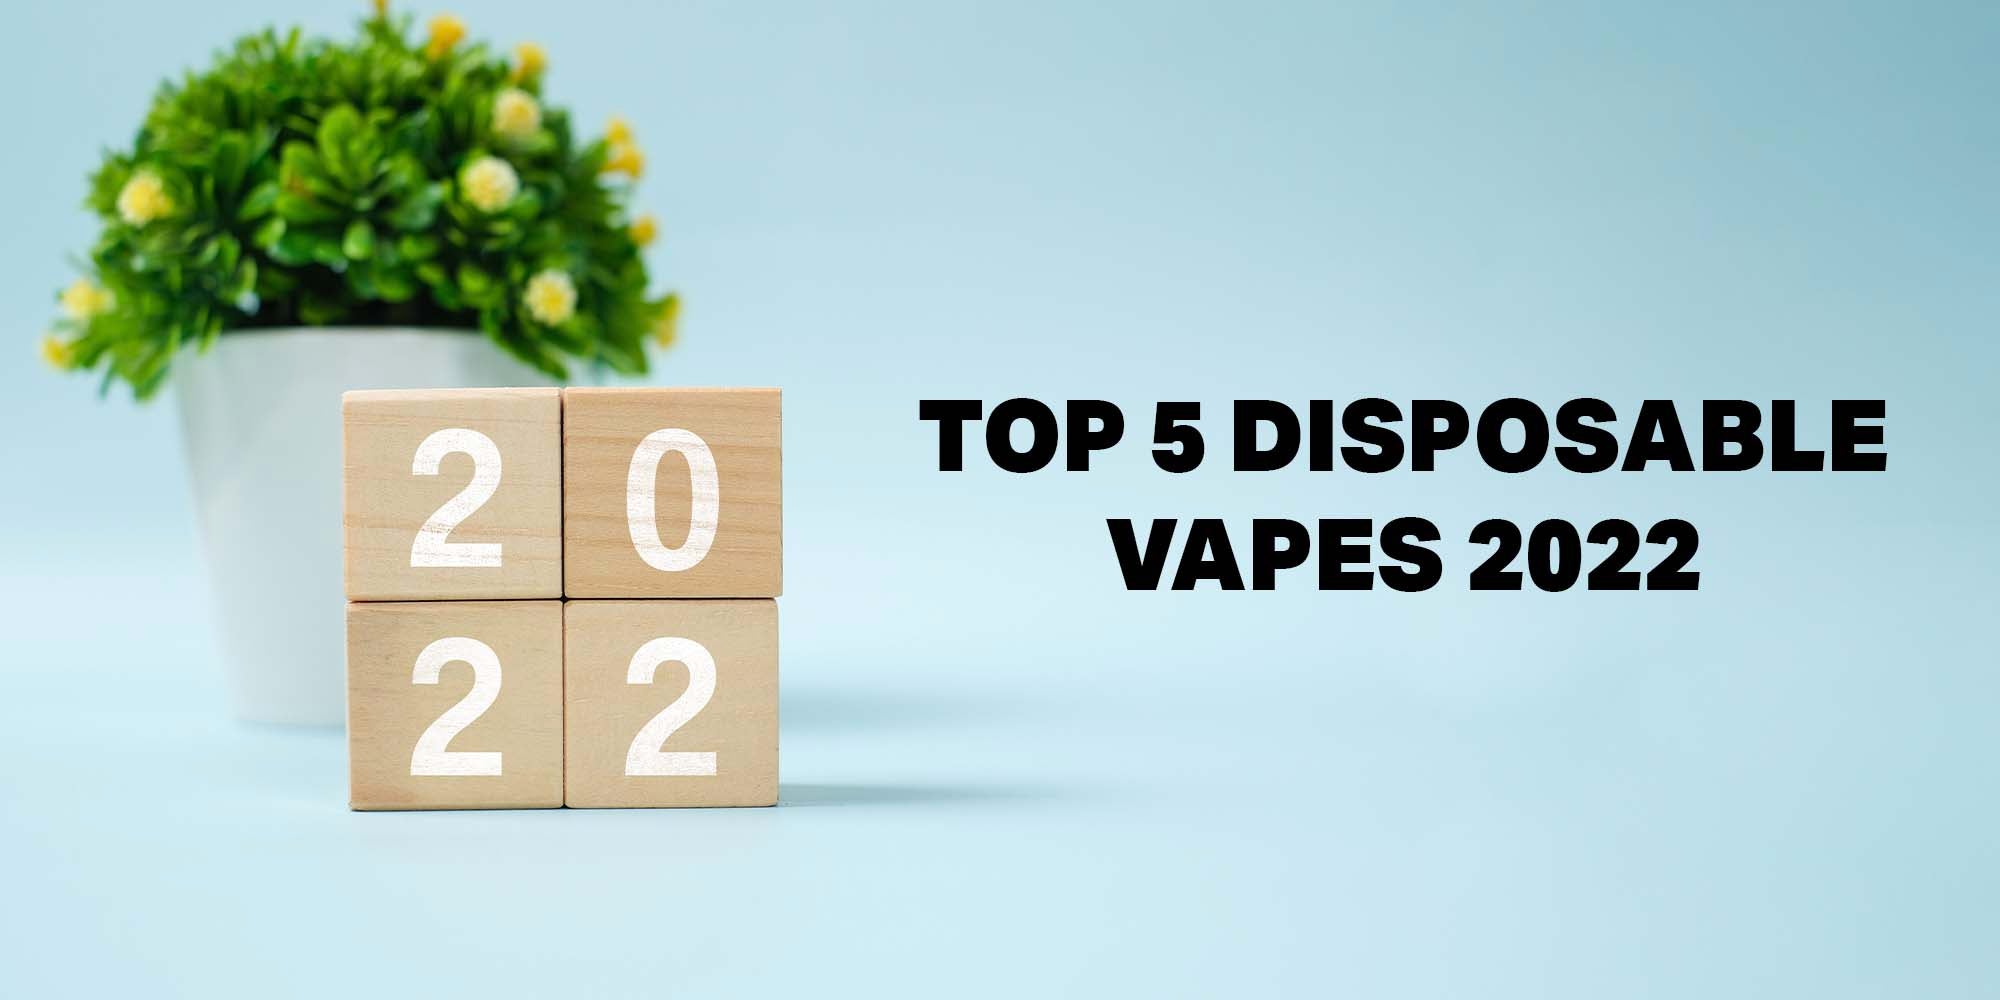 Top 5 disposable vapes 2022